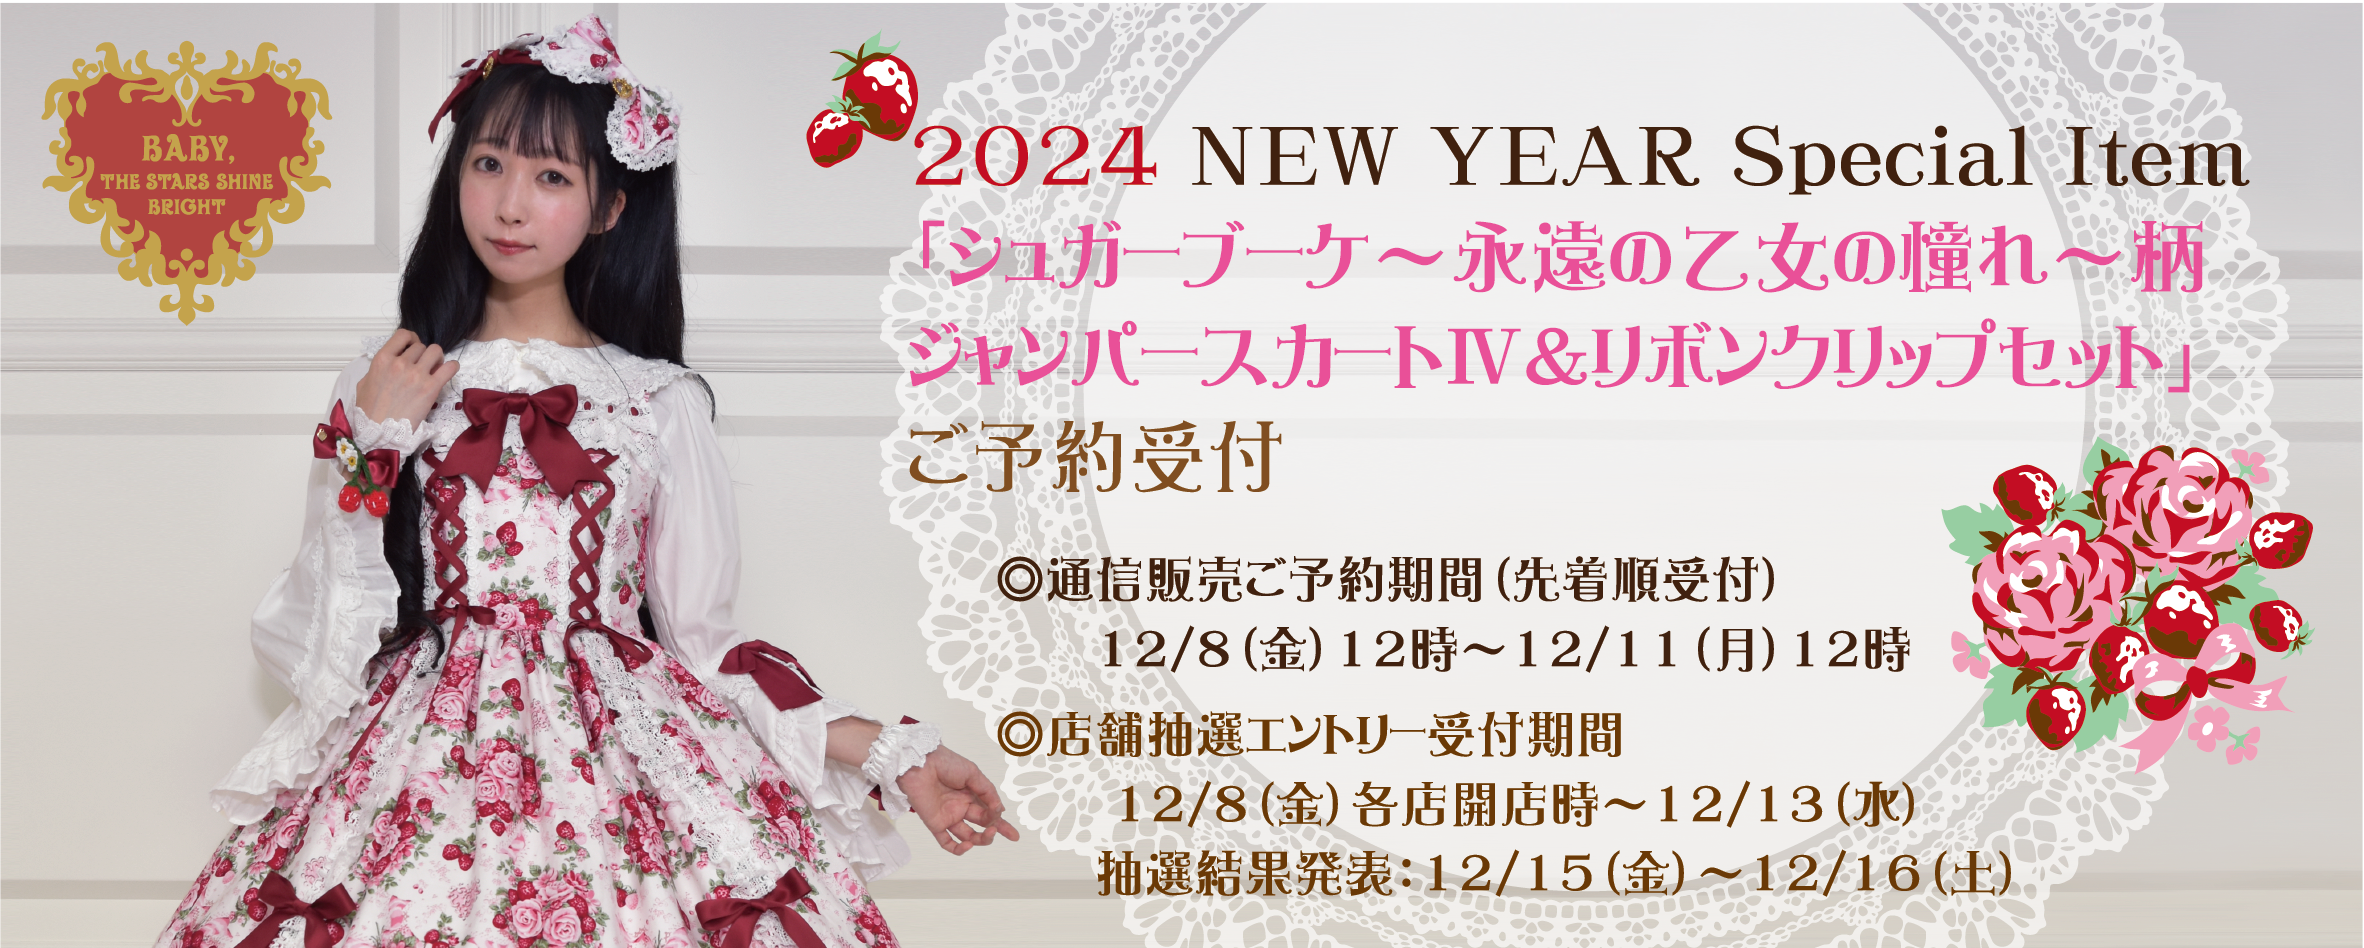 2024NEW YEAR Special Item「シュガーブーケ～永遠の乙女の憧れ～柄 